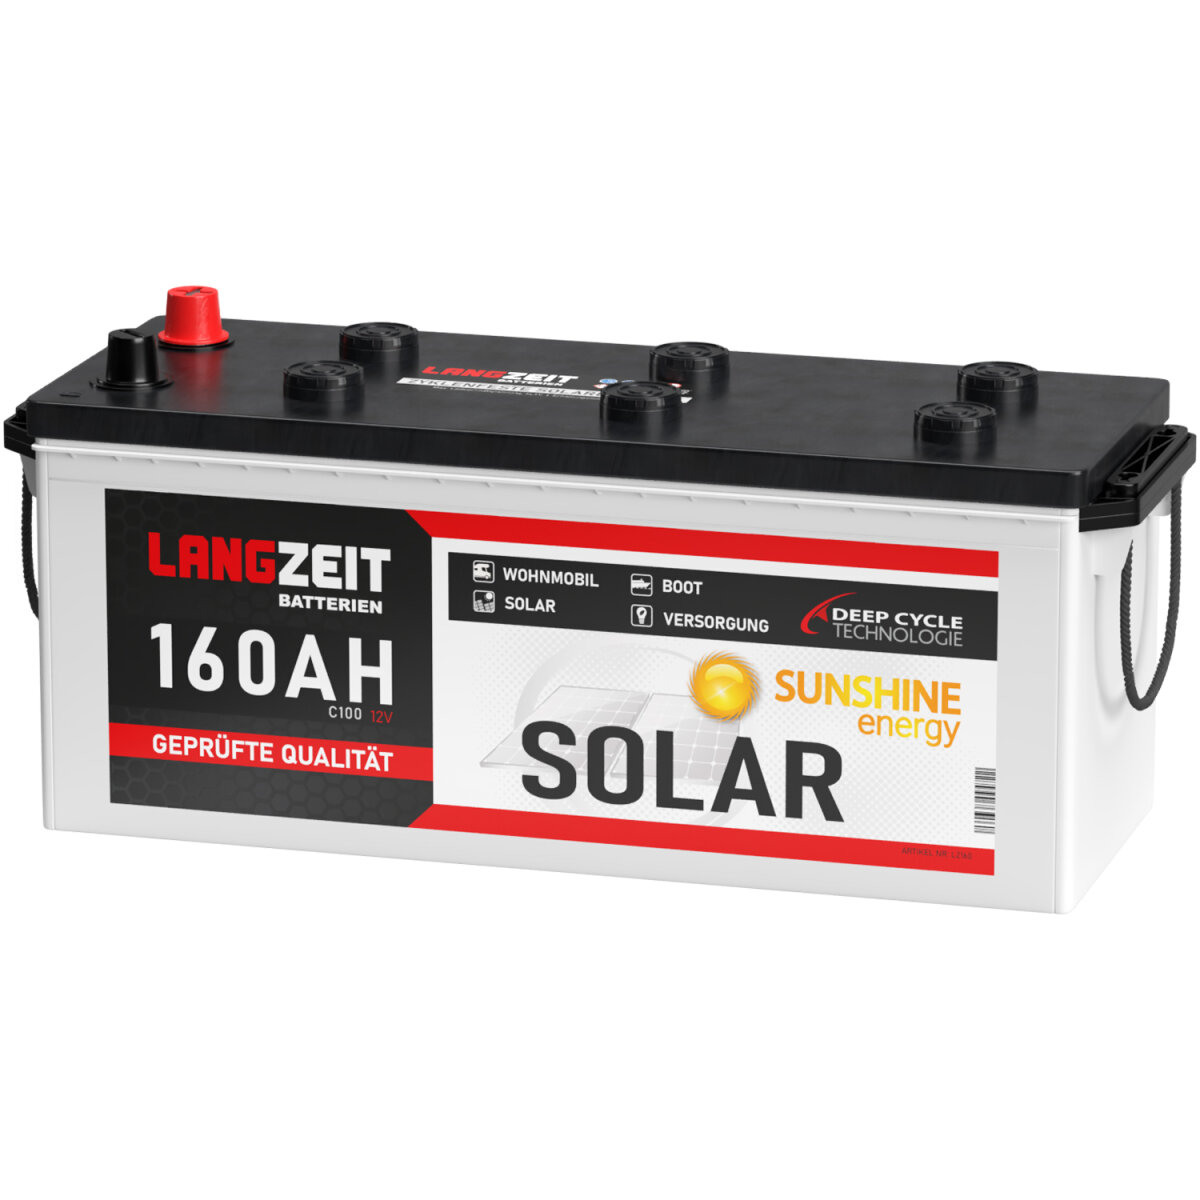 https://www.batteriespezialist.de/media/image/product/8752/lg/langzeit-solarbatterie-160ah-12v.jpg